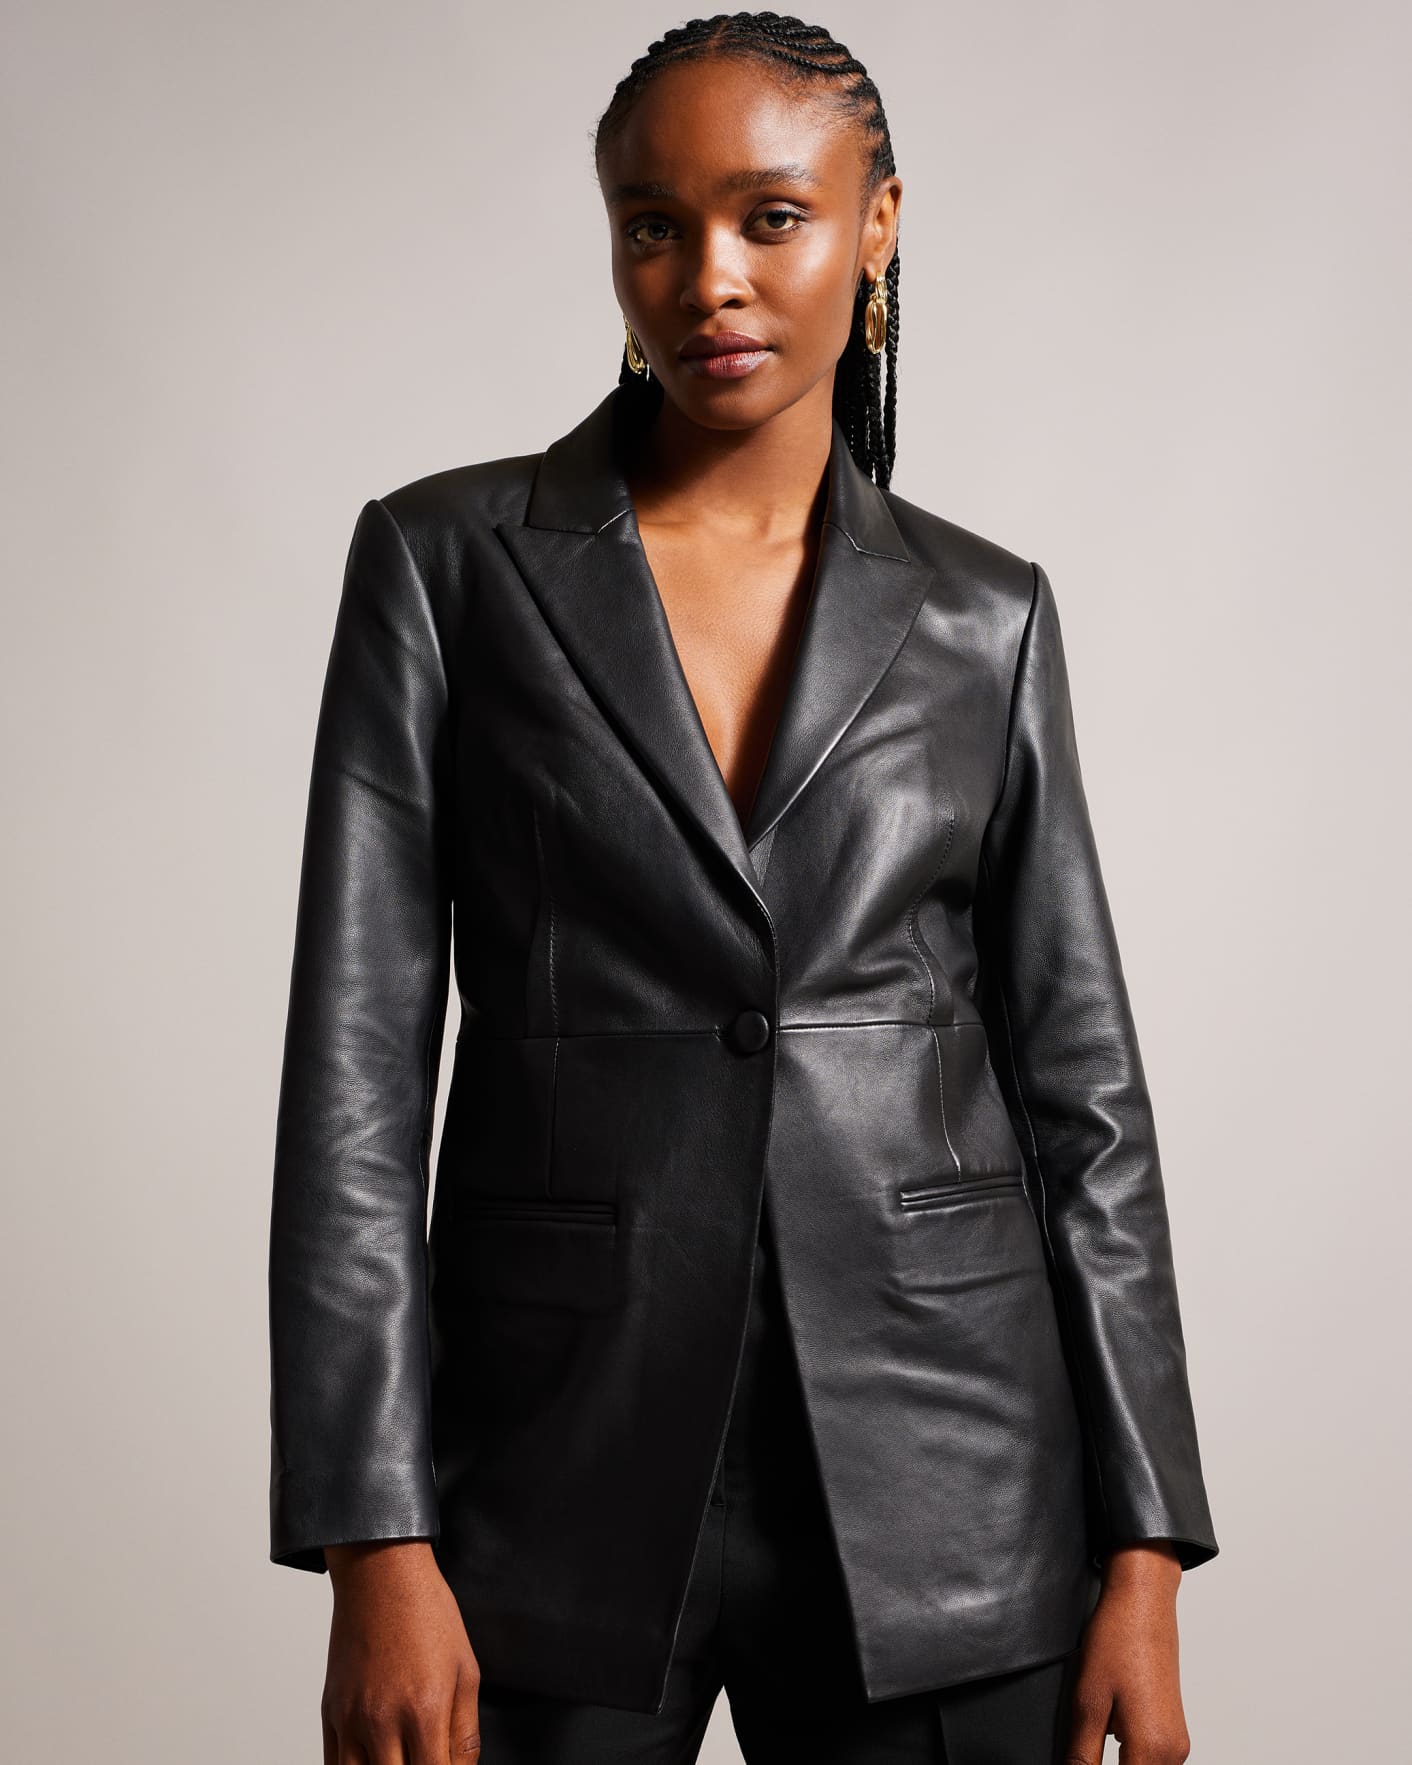 Women's Leather Jackets